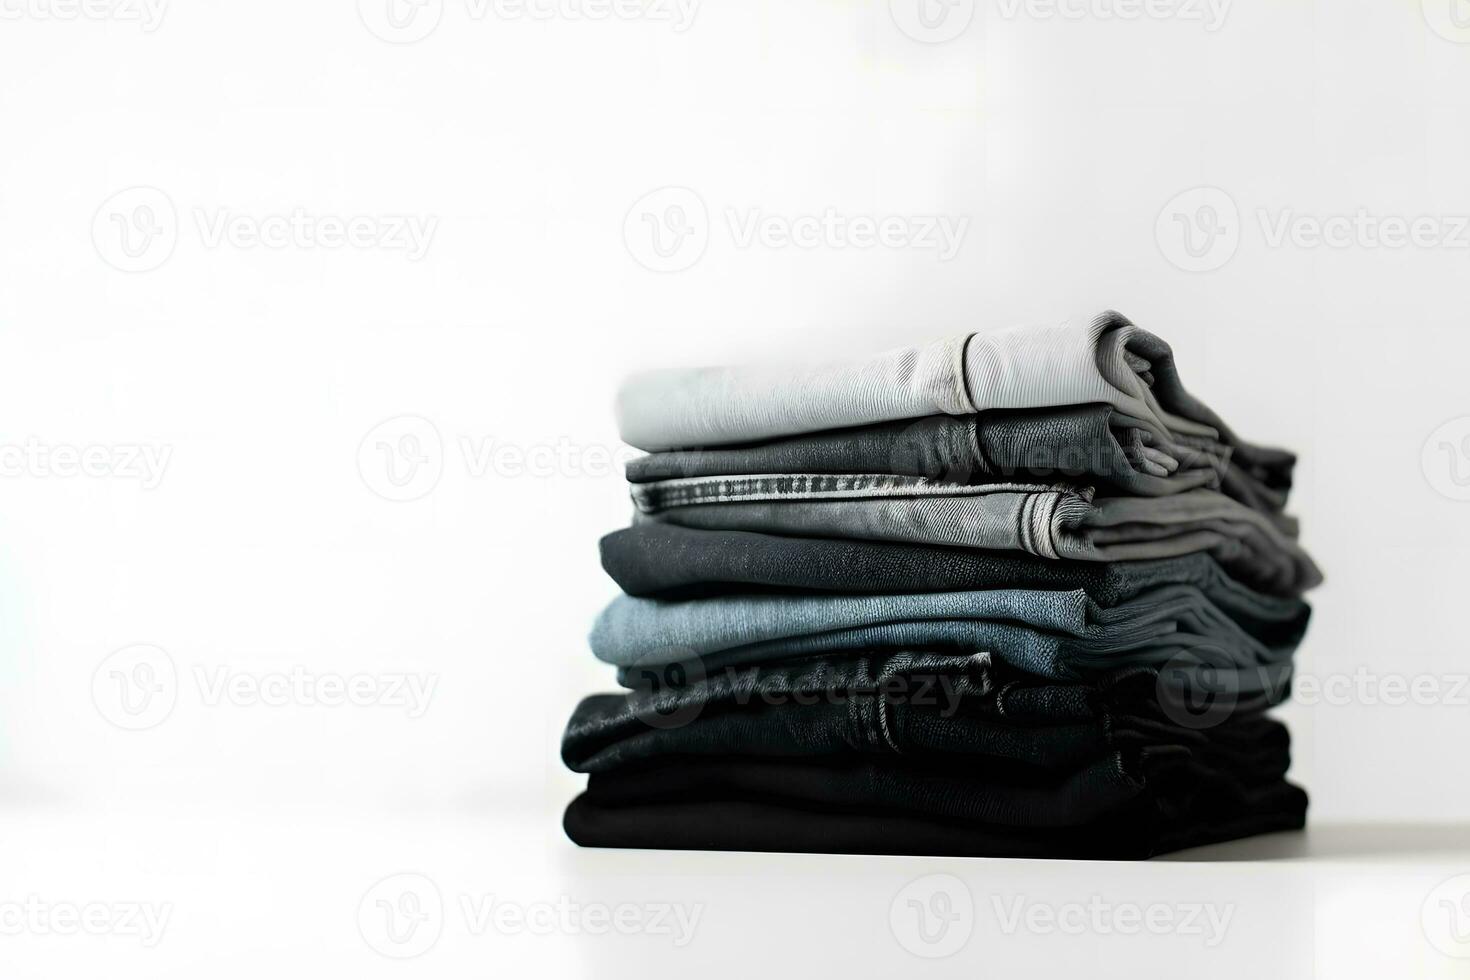 jeans broek stack Aan wit achtergrond. neurale netwerk ai gegenereerd foto